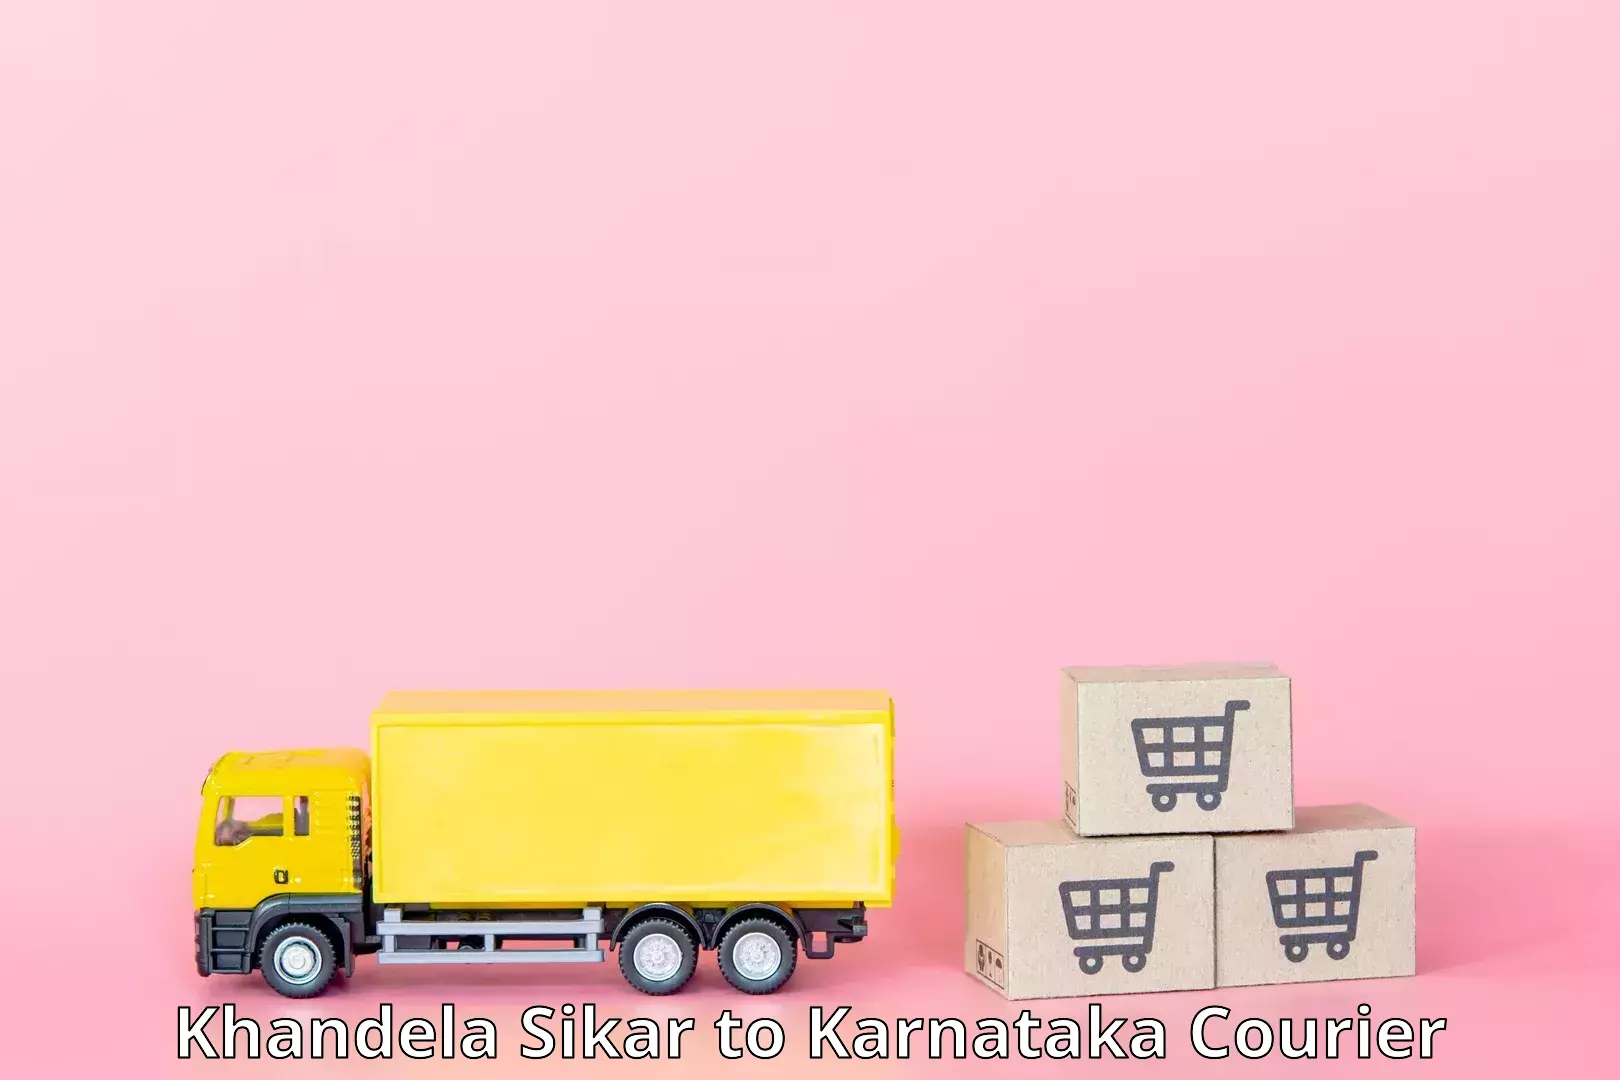 Rapid freight solutions Khandela Sikar to Karnataka